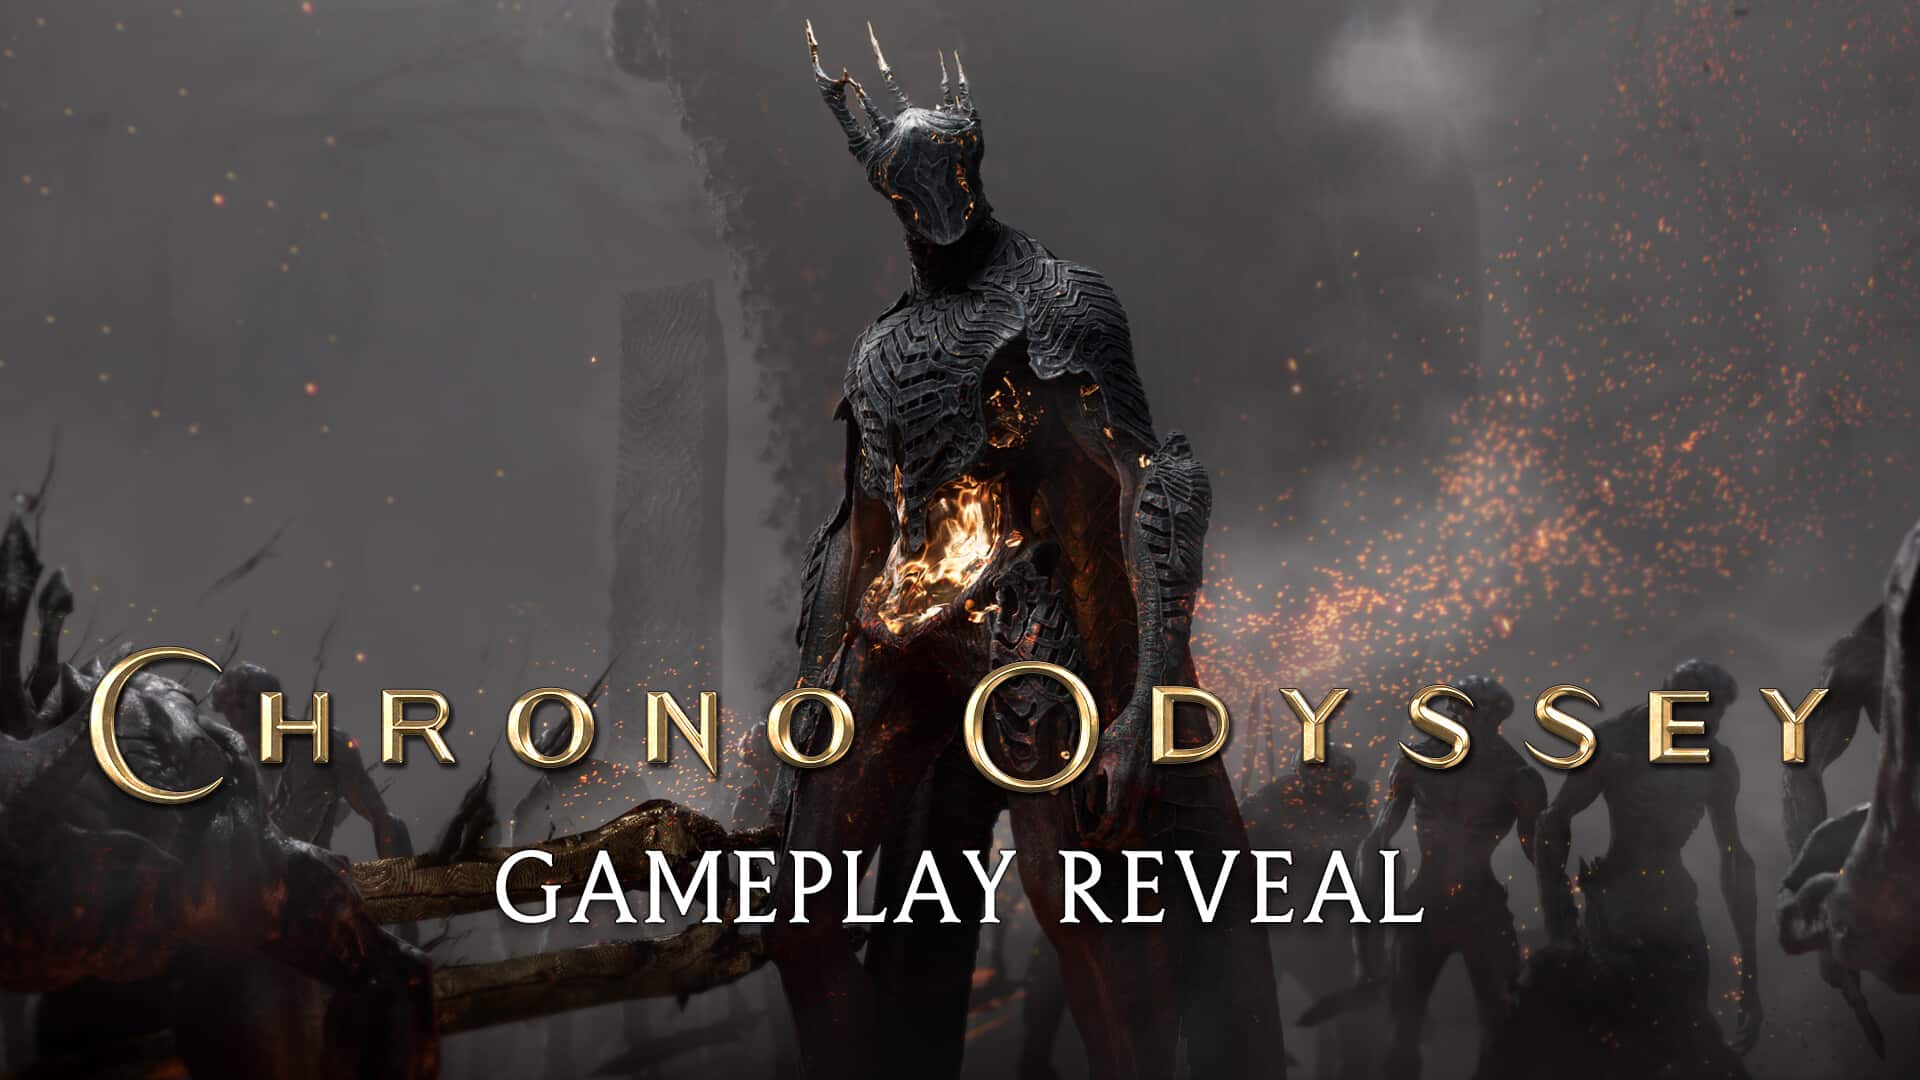 Chrono Odyssey Gameplay Reveal Poster